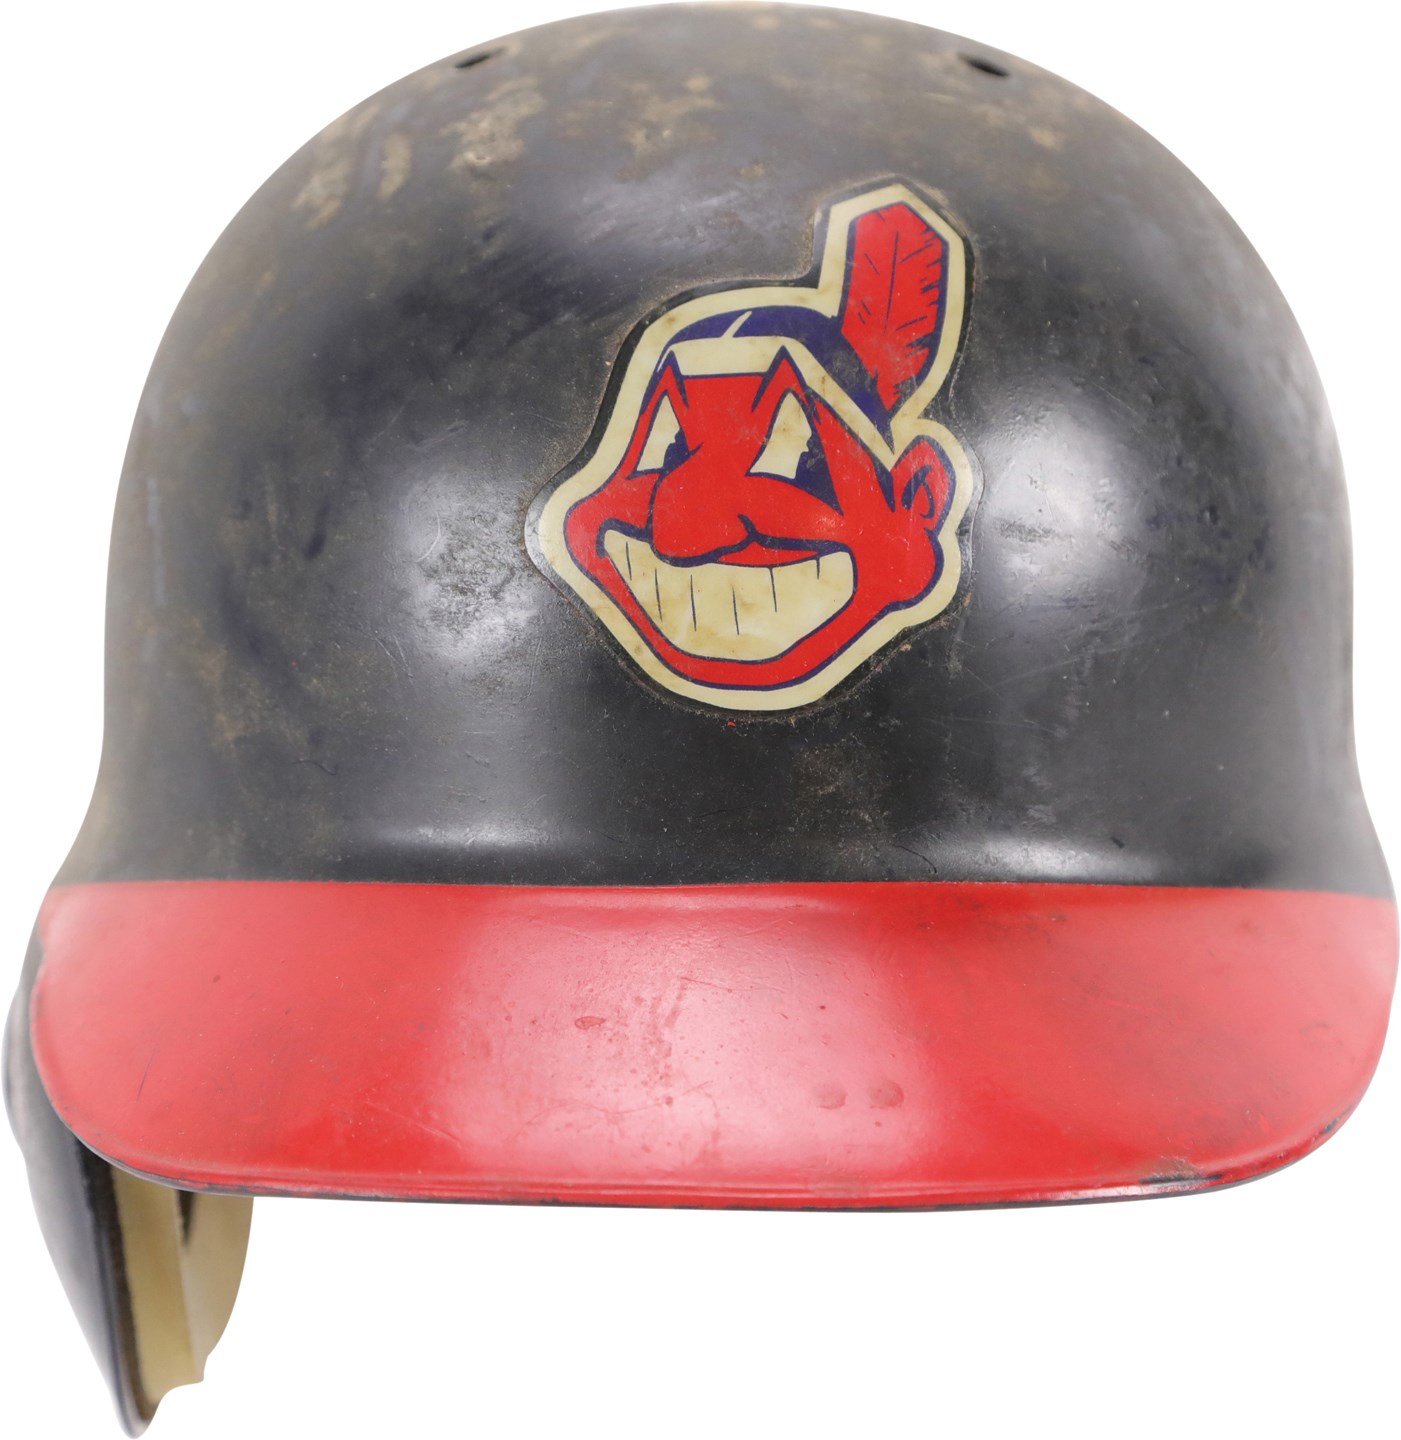 - Jim Thome Cleveland Indians Rookie Era Game Used Batting Helmet